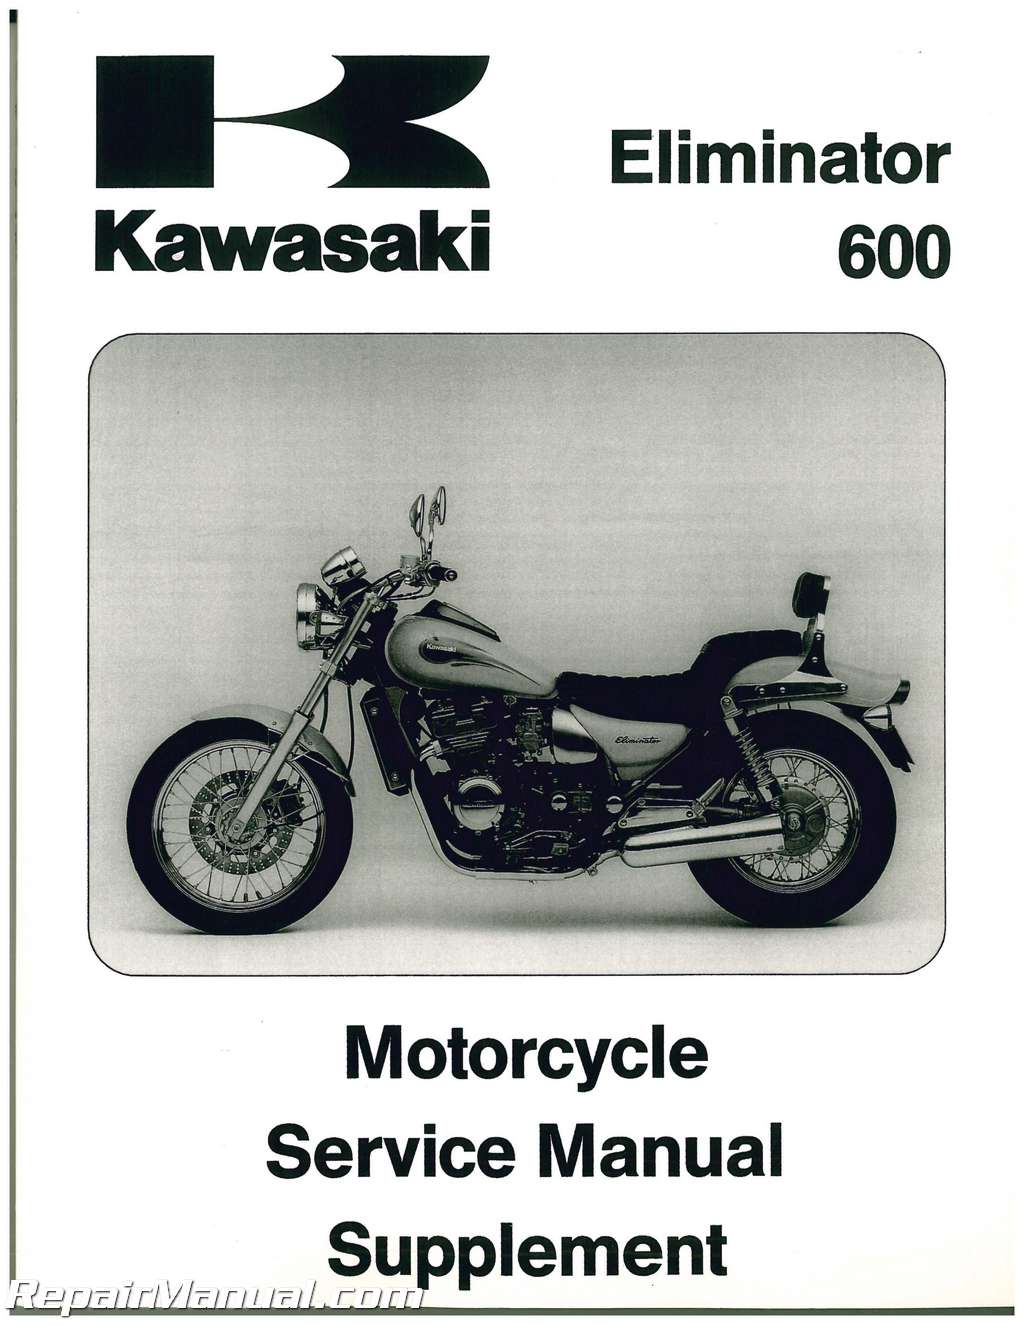 1995-1997 Kawasaki Service Manual Supplement